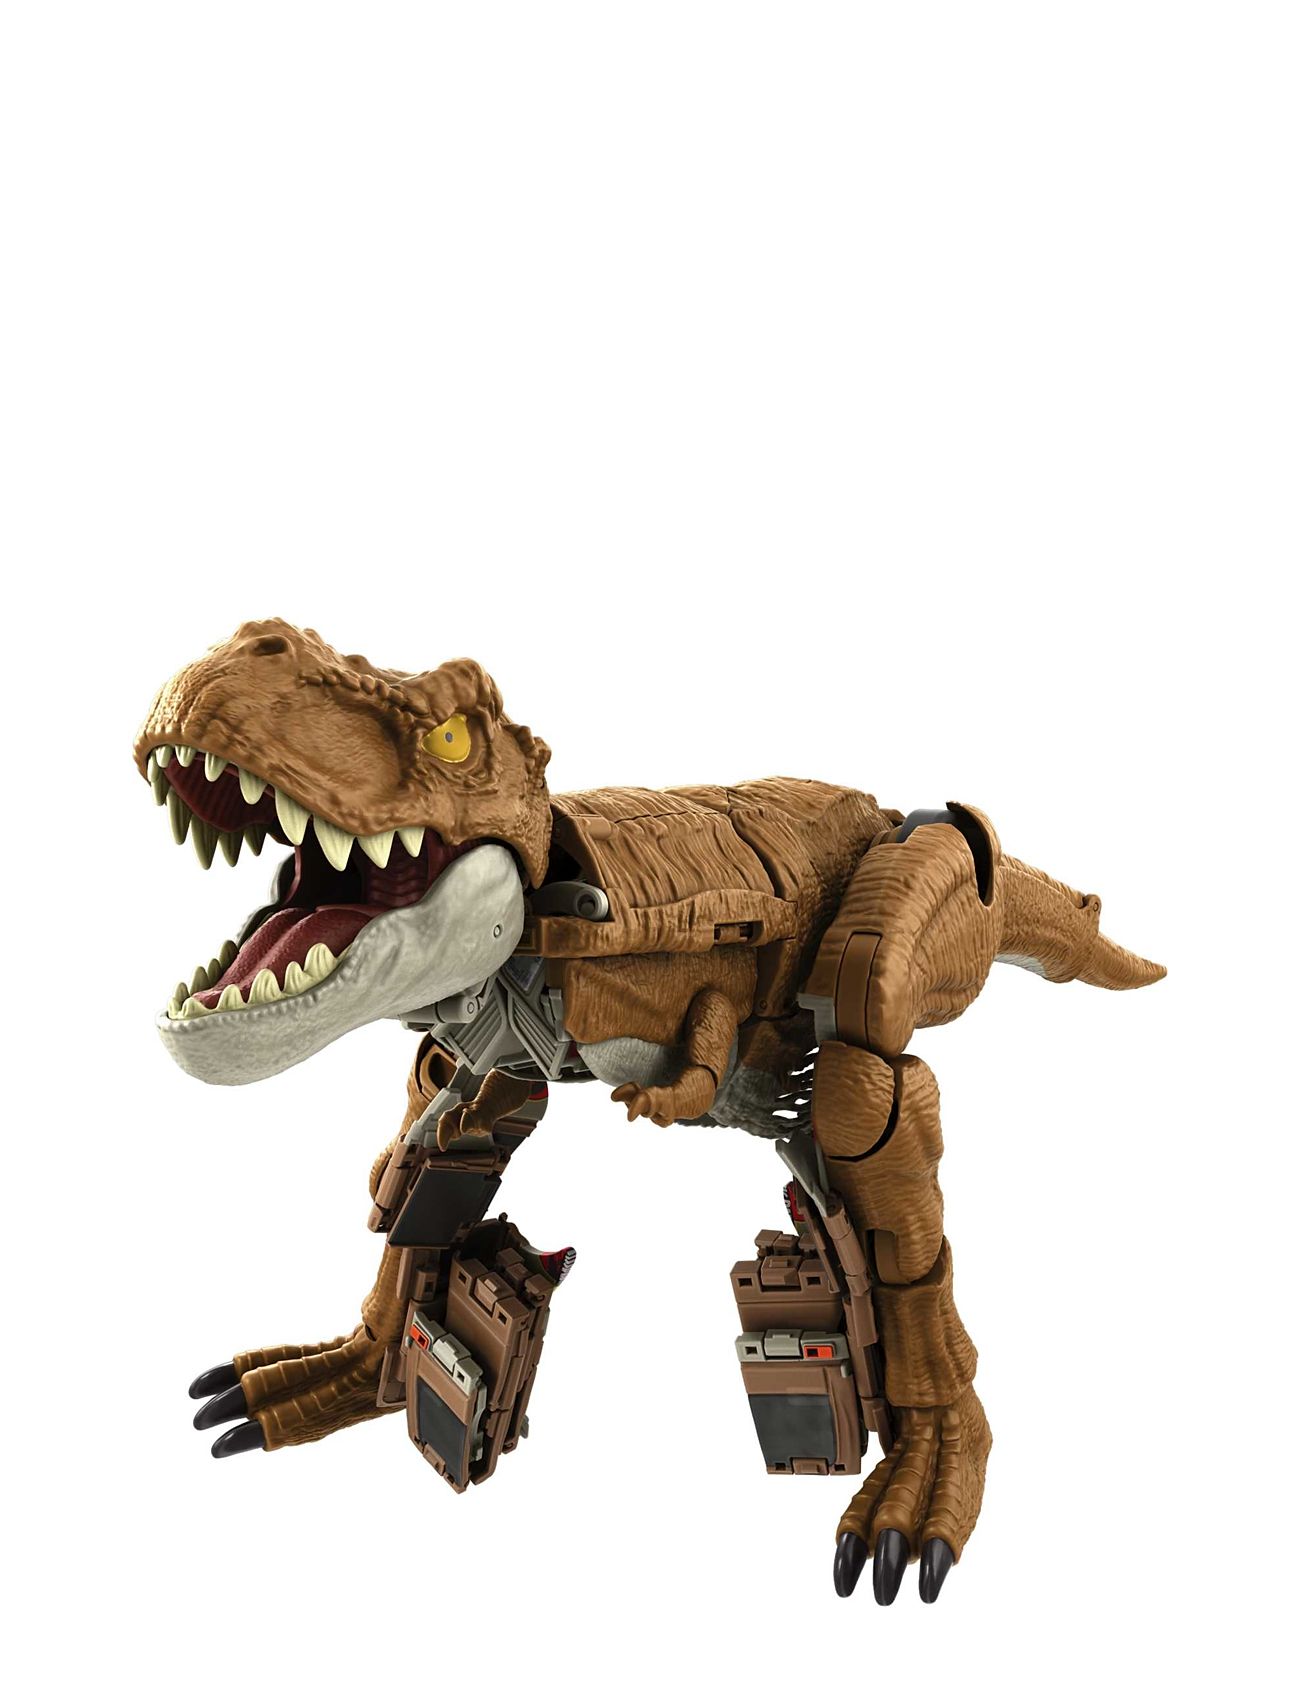 "Jurassic world" World Fierce Changers Chase 'N Roar Tyrannosaurus Rex Toys Playsets & Action Figures Animals Multi/patterned Jurassic World"